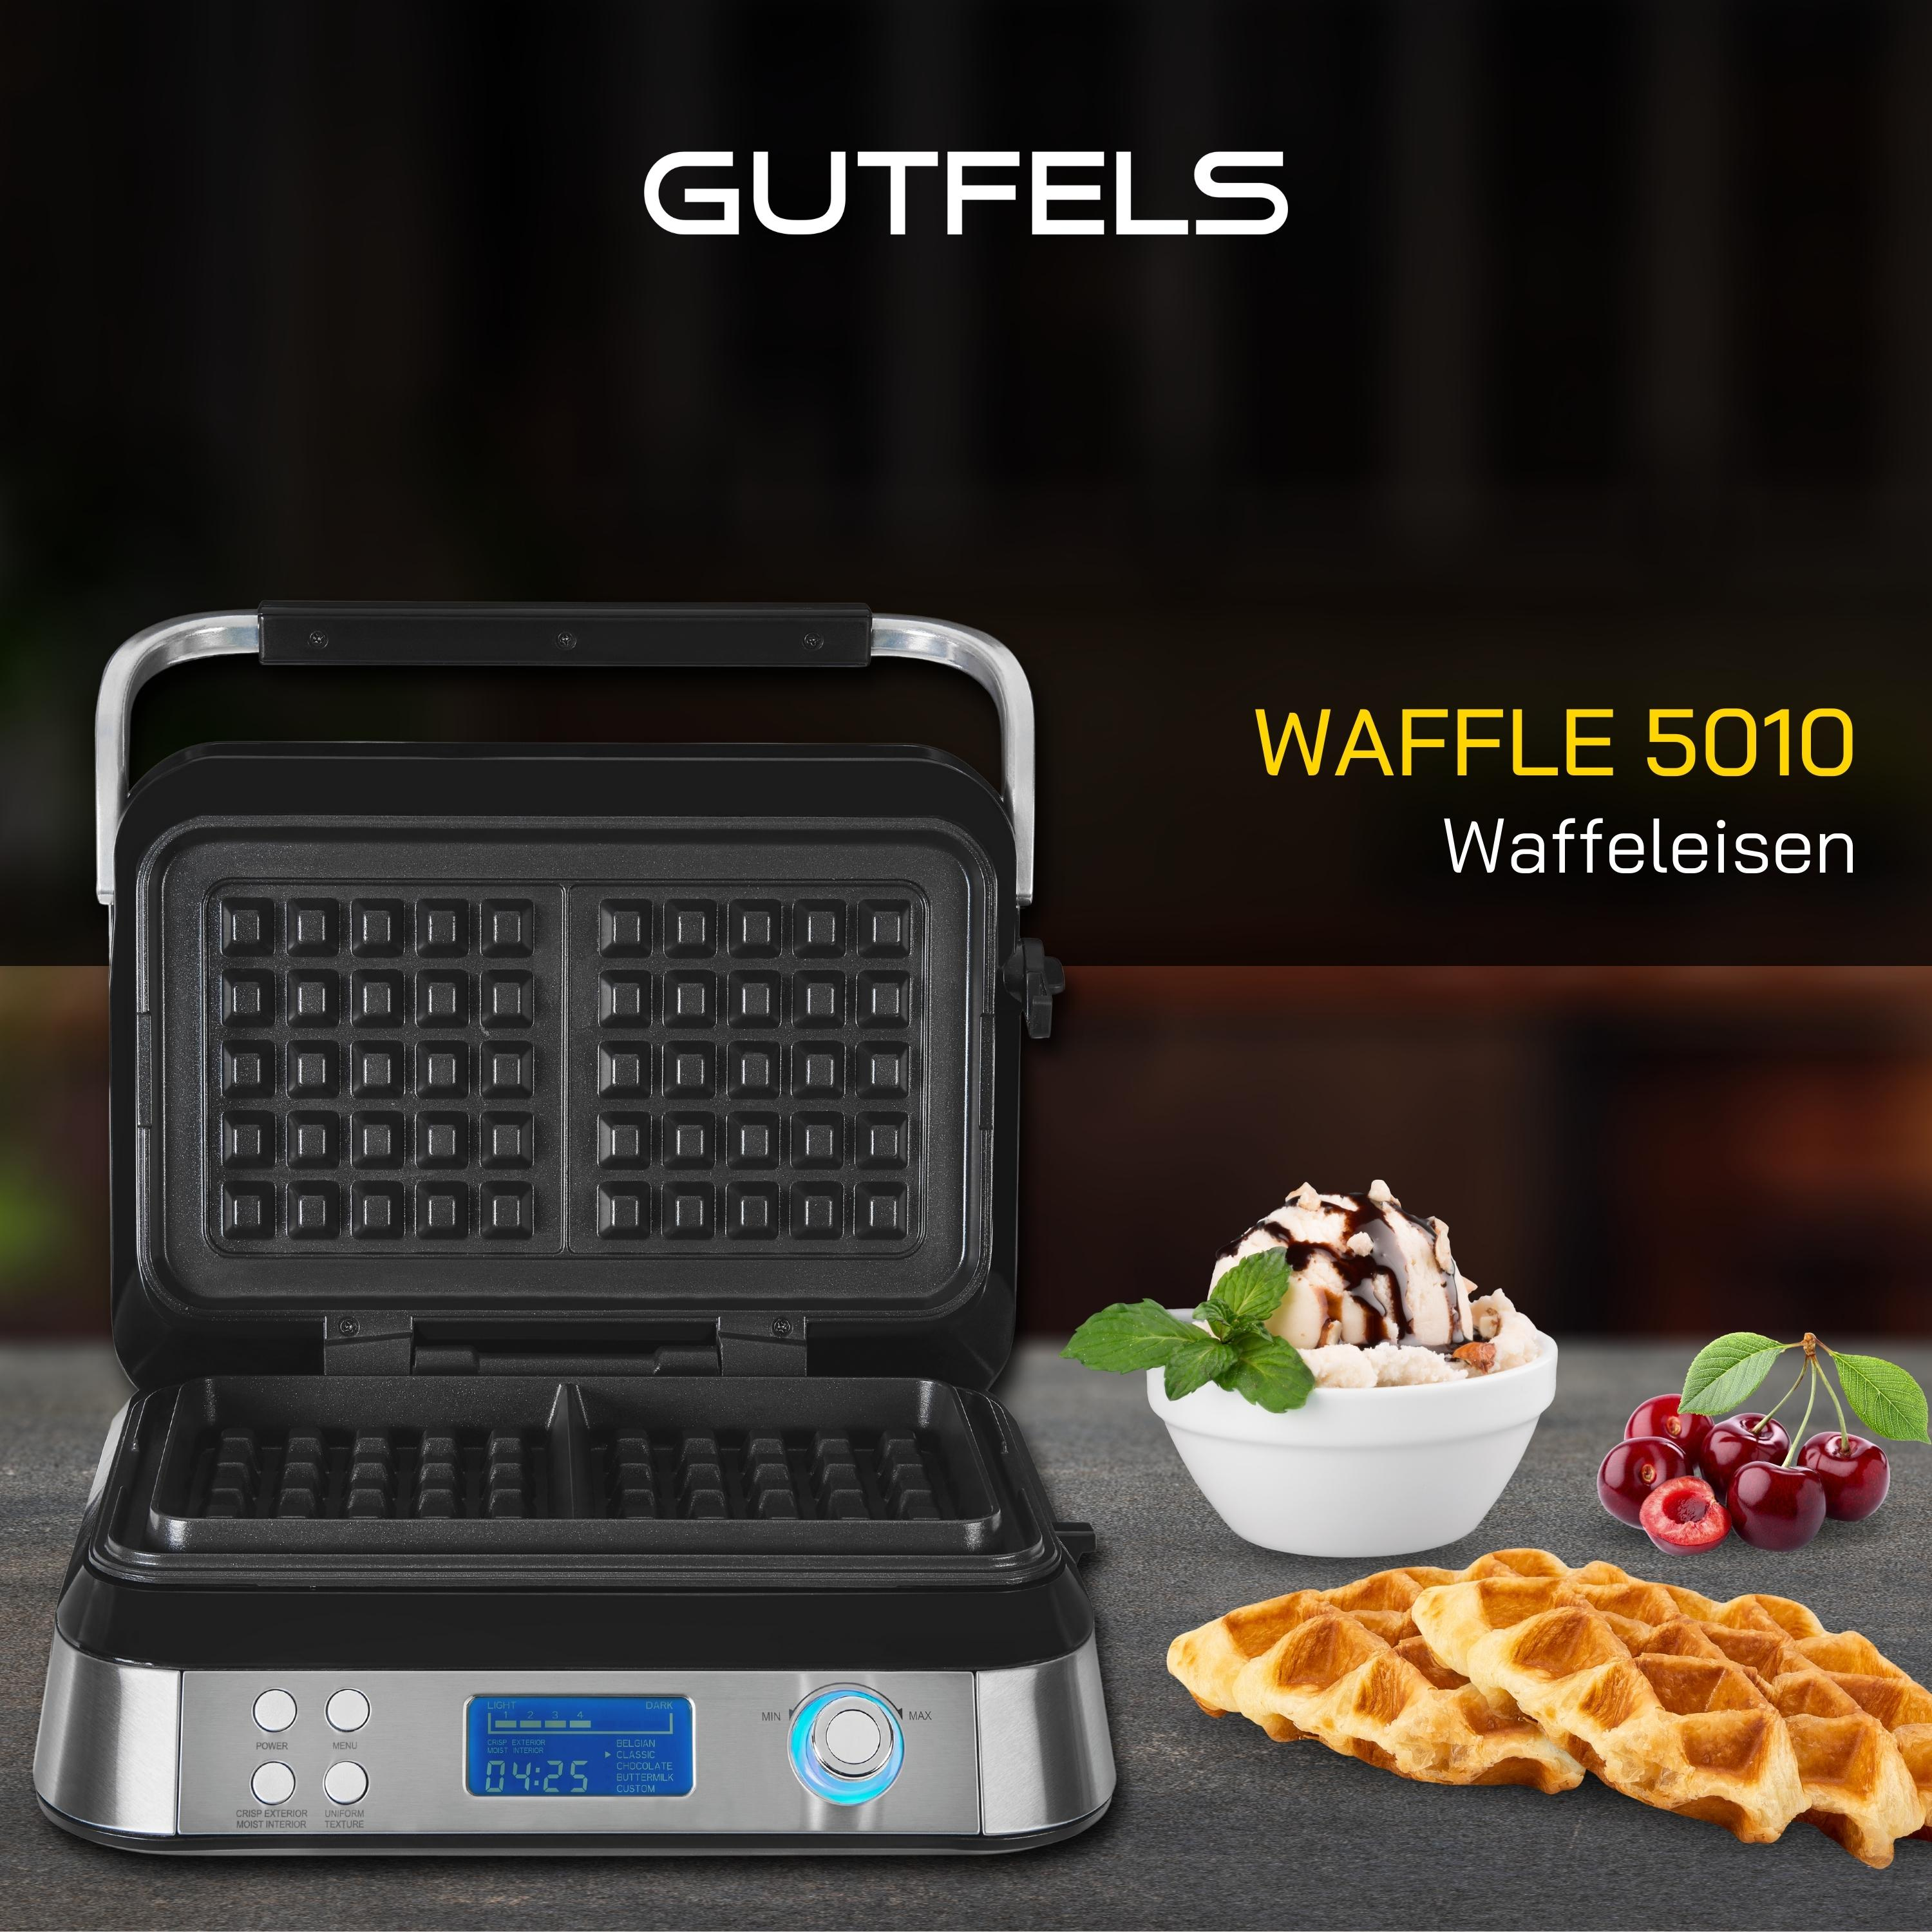 GUTFELS WAFFLE 5010 Edelstahl Waffeleisen